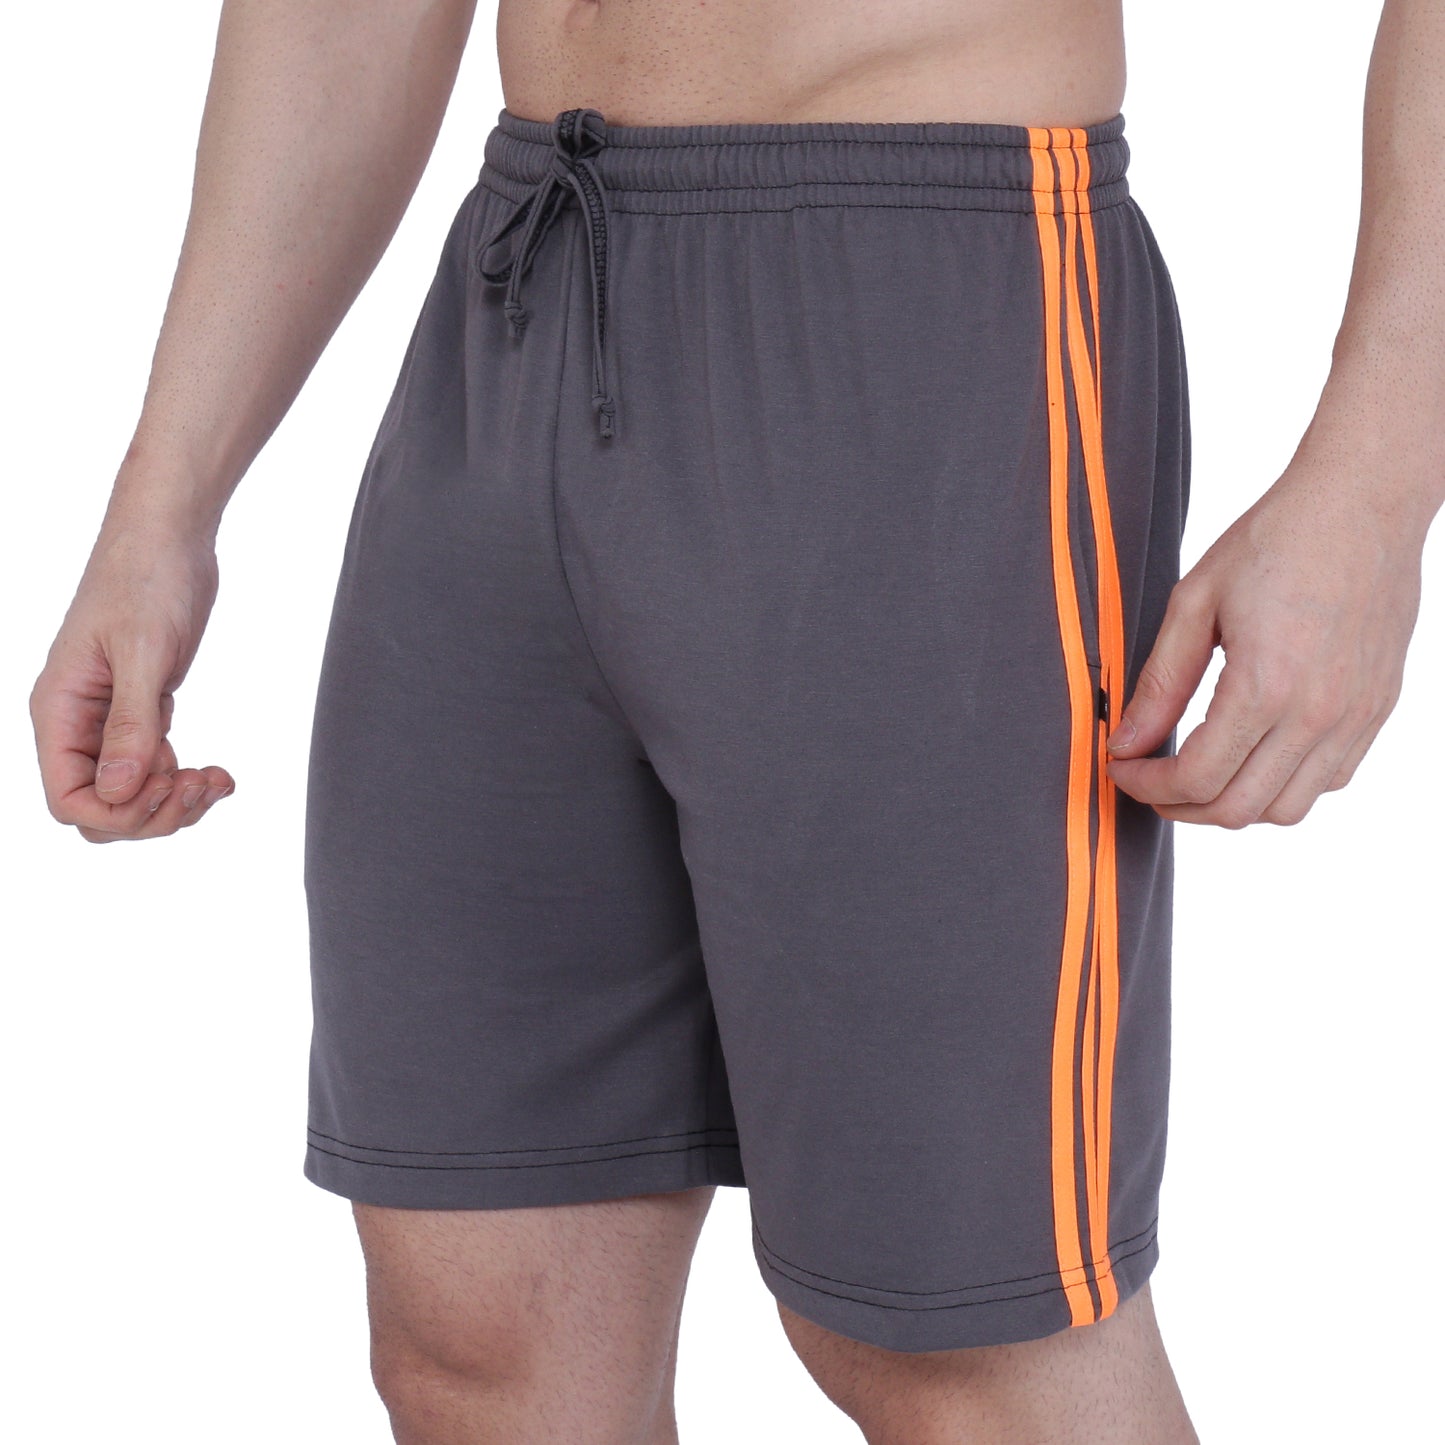 NEO GARMENTS Men’s Cotton Long Shorts. (stripe)  | GREY | SIZES FROM M TO 7XL.